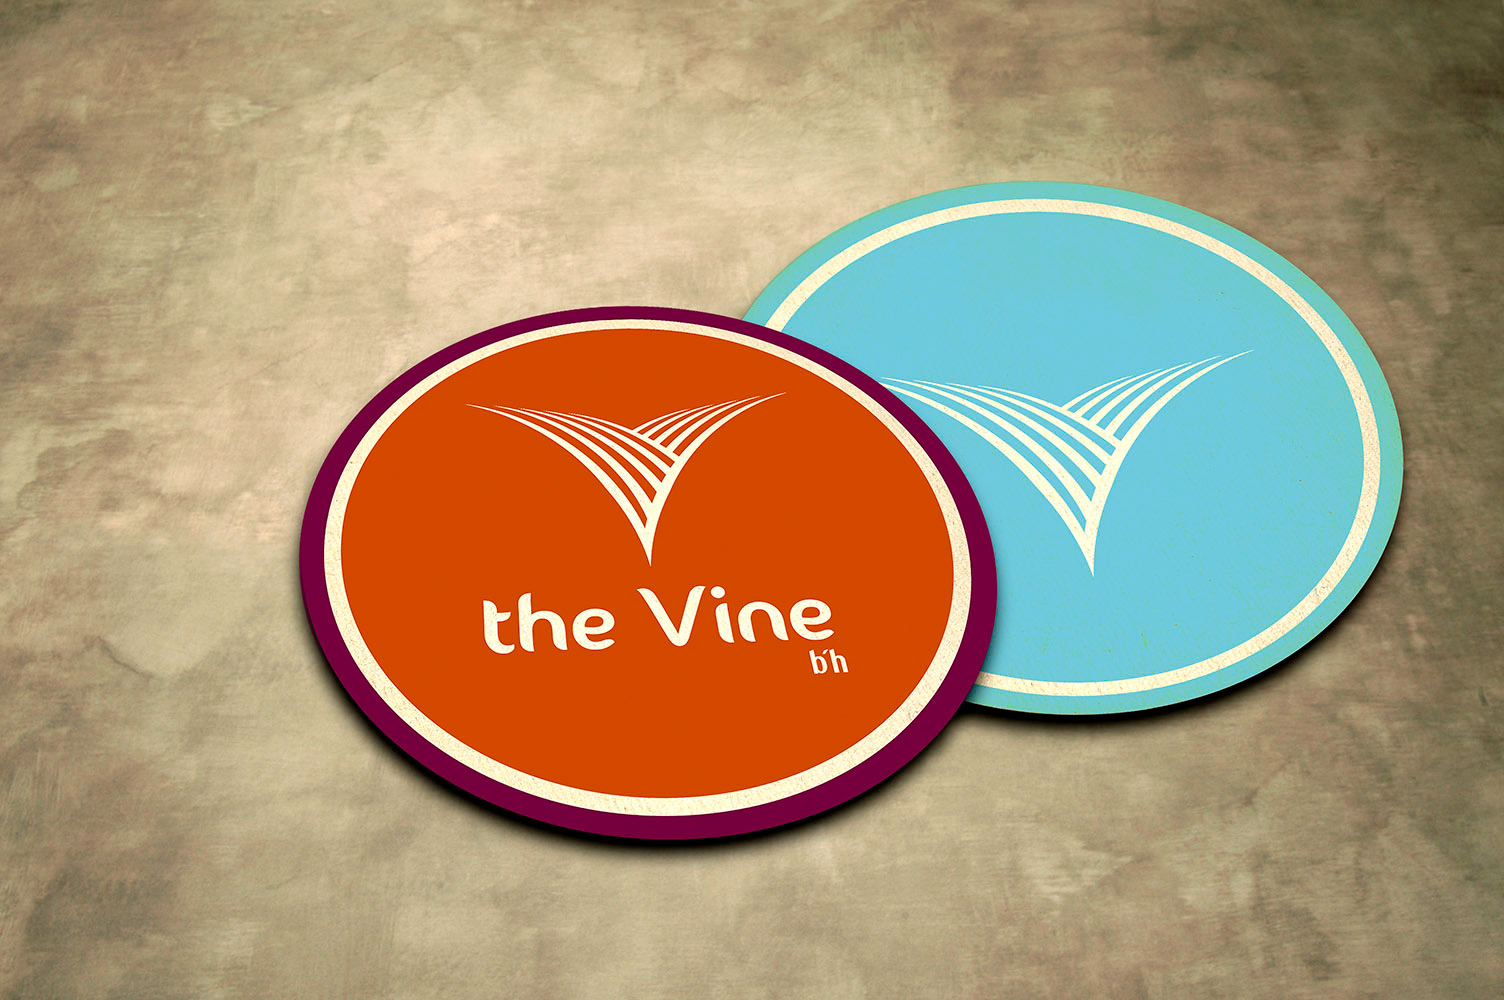 Portavasos The Vine